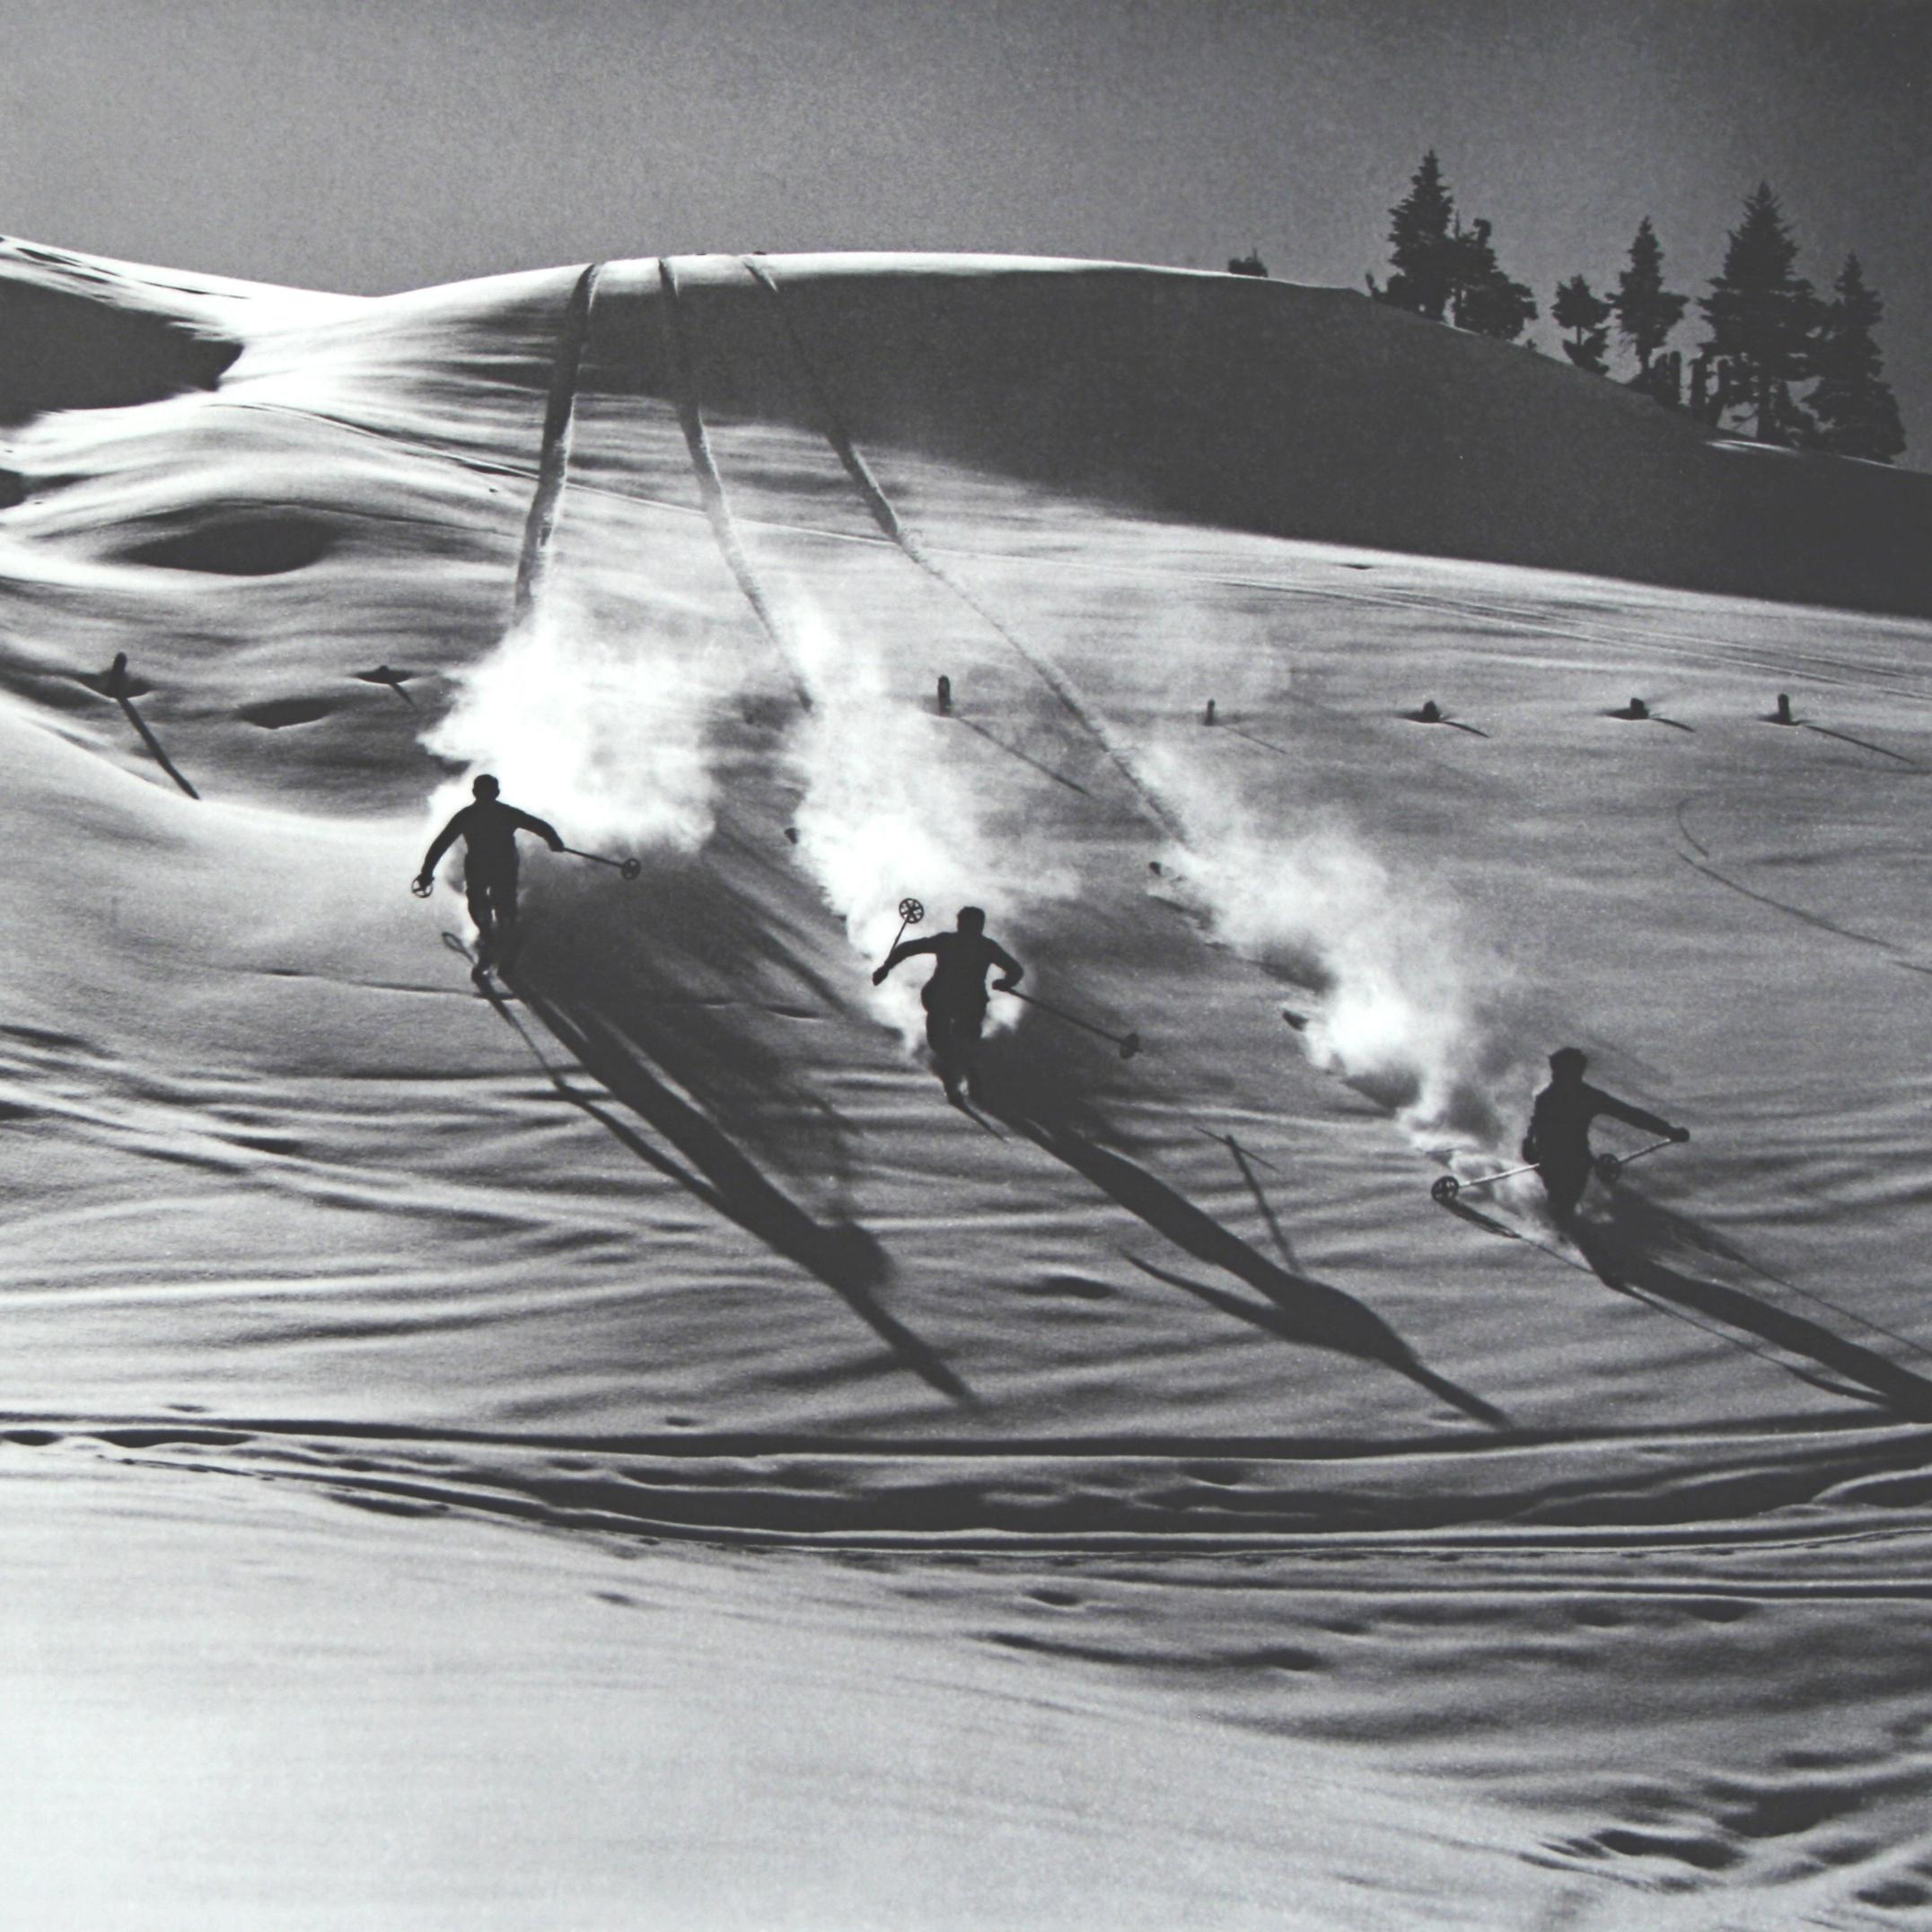 Sporting Art Alpine Ski Photograph, 'Descent in Powder' Taken from Original 1930s Photograph